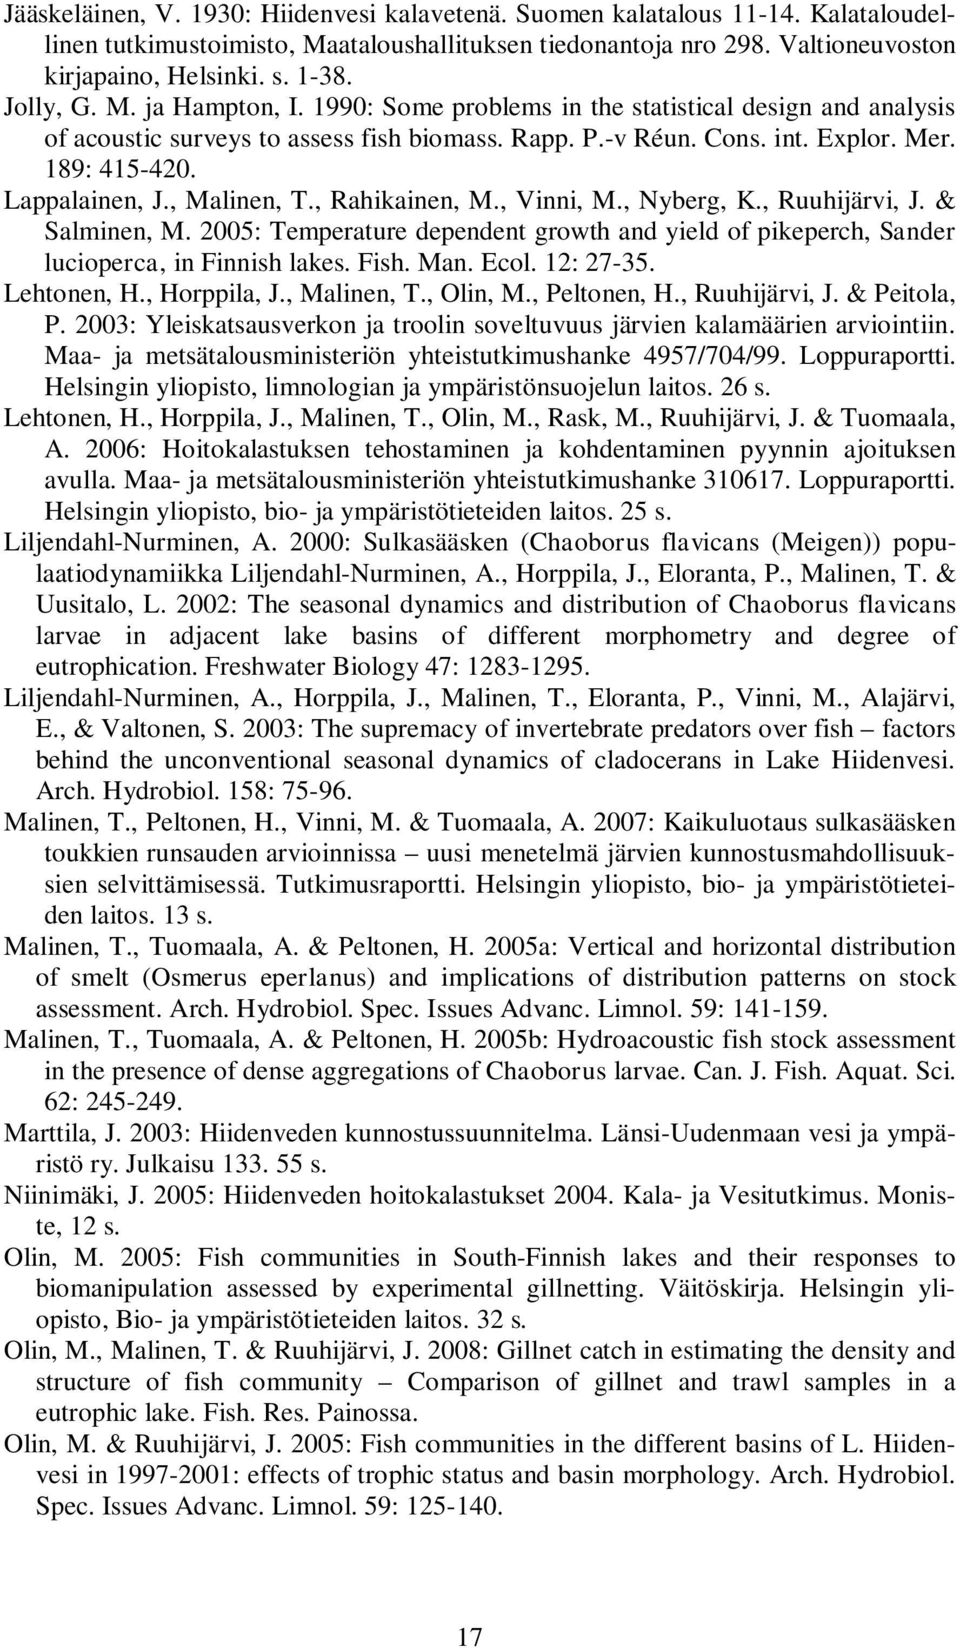 , Malinen, T., Rahikainen, M., Vinni, M., Nyberg, K., Ruuhijärvi, J. & Salminen, M. 25: Temperature dependent growth and yield of pikeperch, Sander lucioperca, in Finnish lakes. Fish. Man. Ecol.